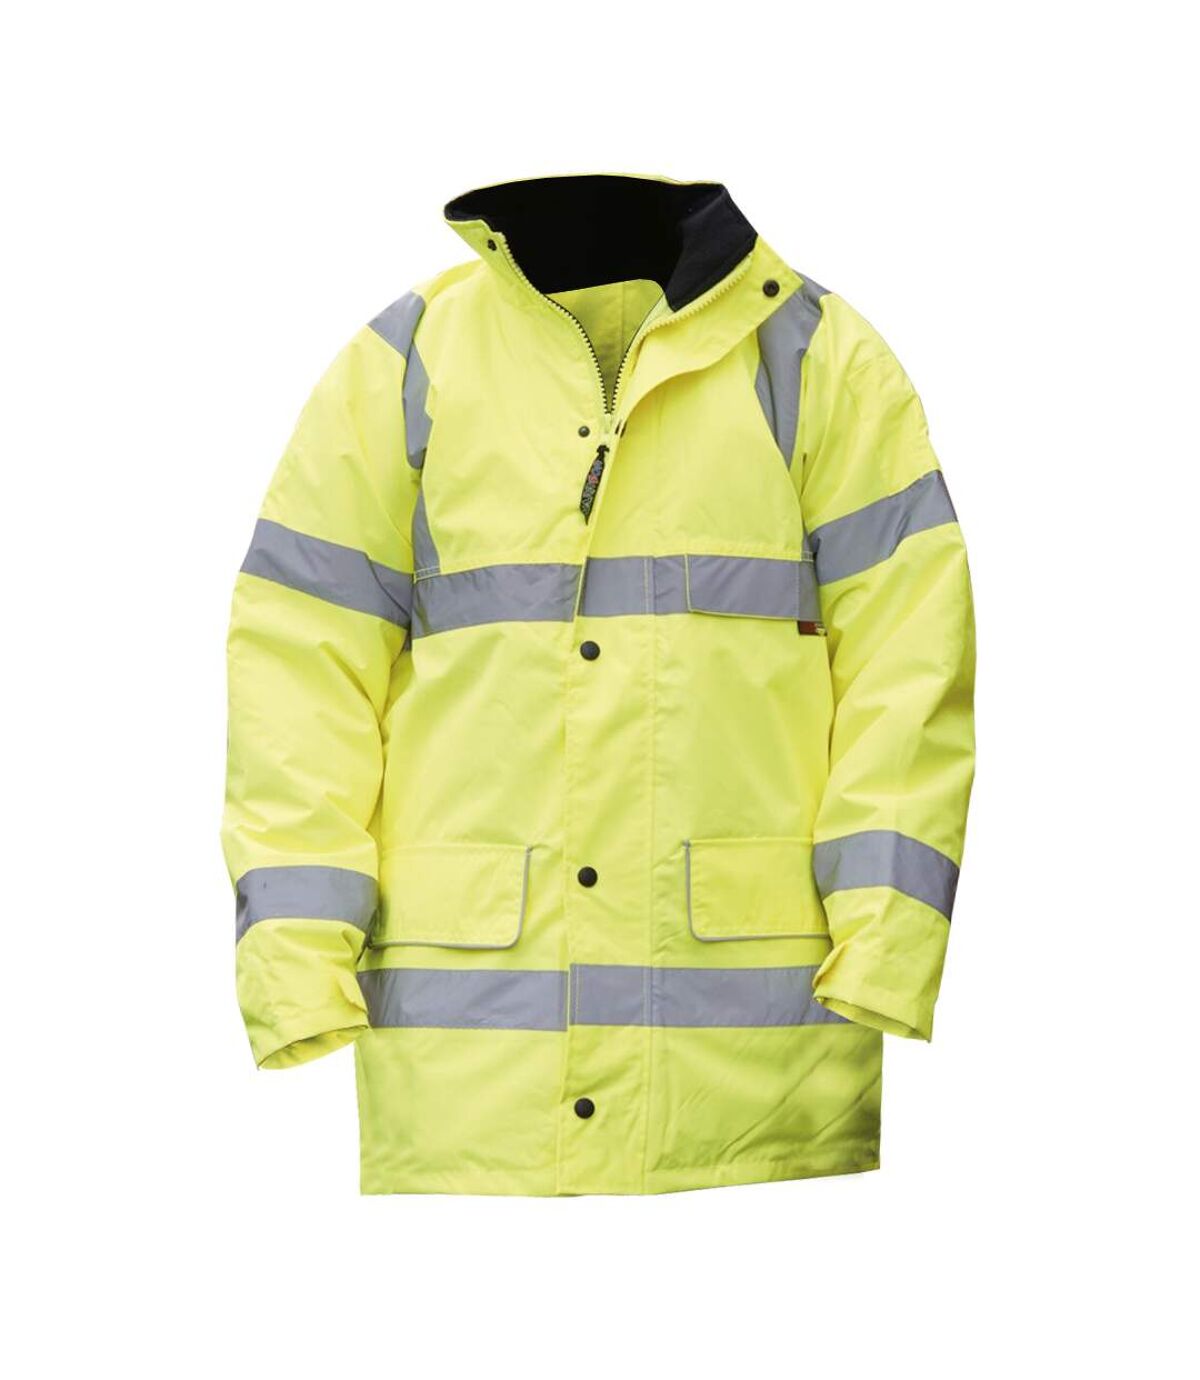 Warrior Mens Nevada High Visibility Safety Jacket (Fluorescent Yellow) - UTPC212